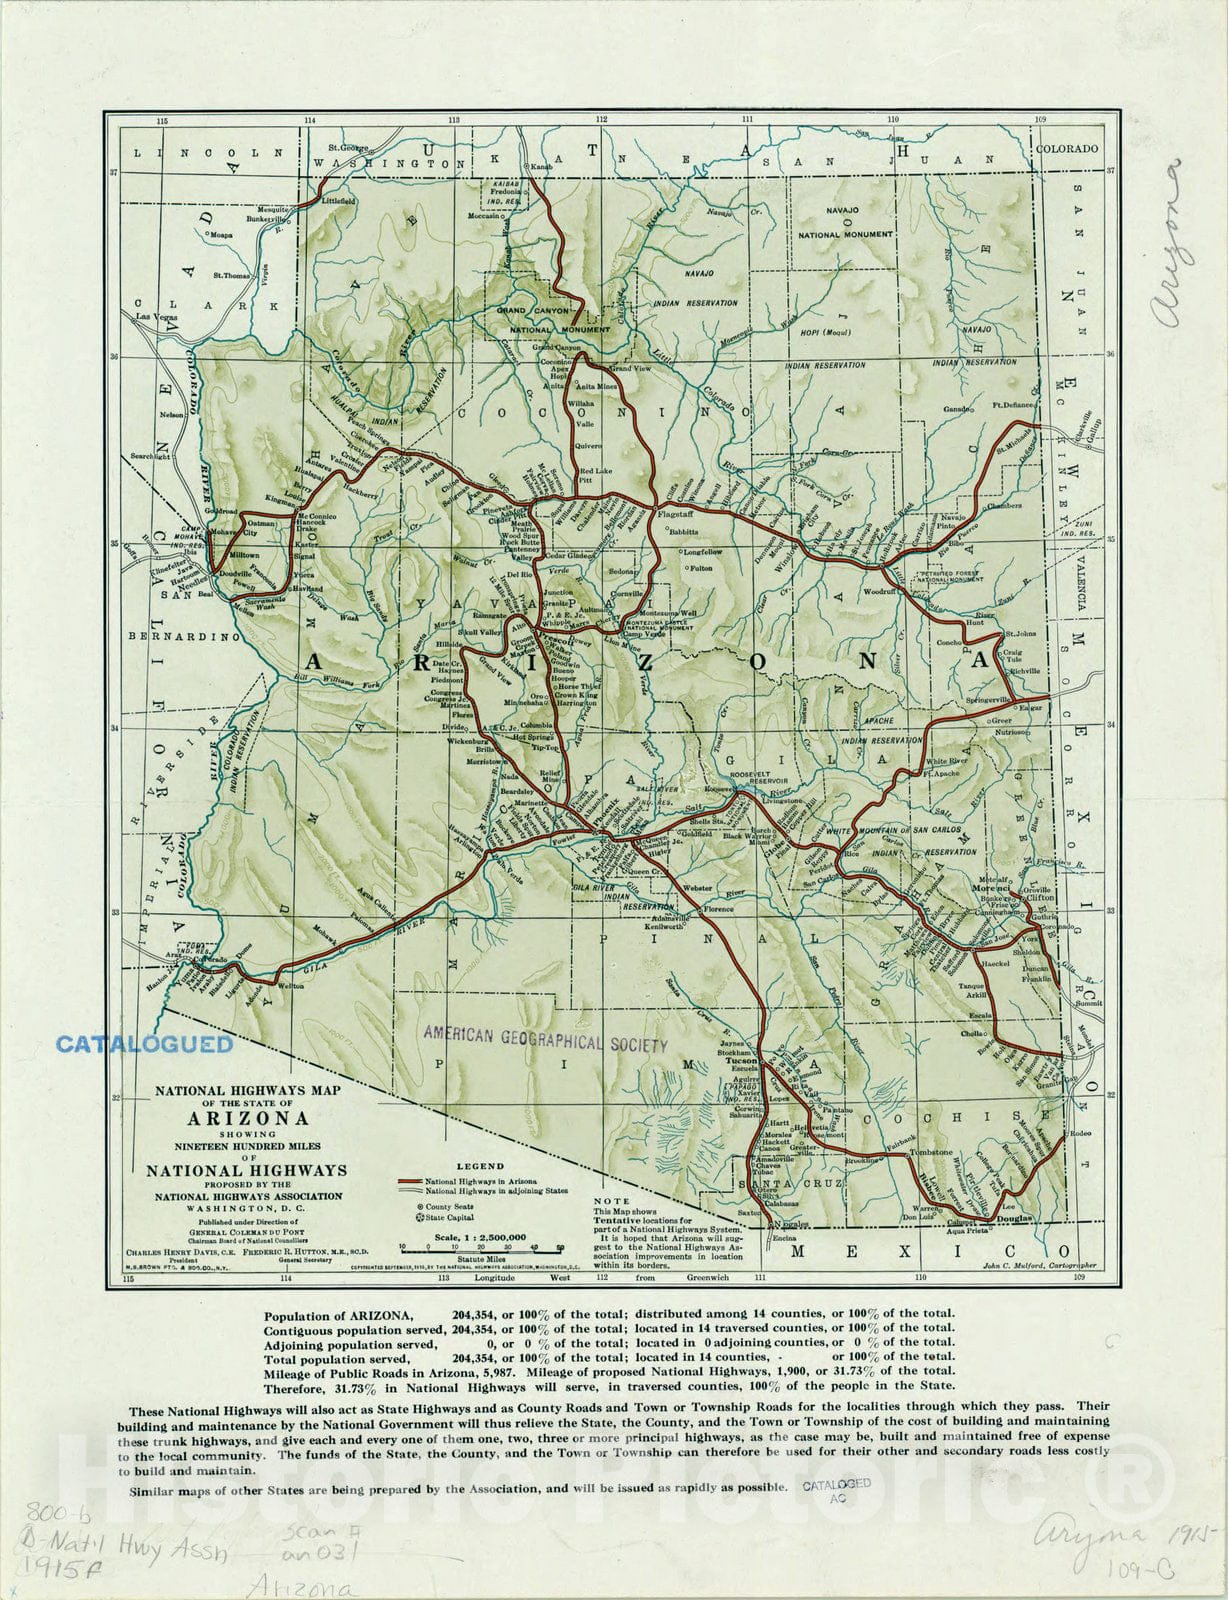 Map : Arizona 1915, National highways map of the state of Arizona : showing nineteen hundred miles of national highways